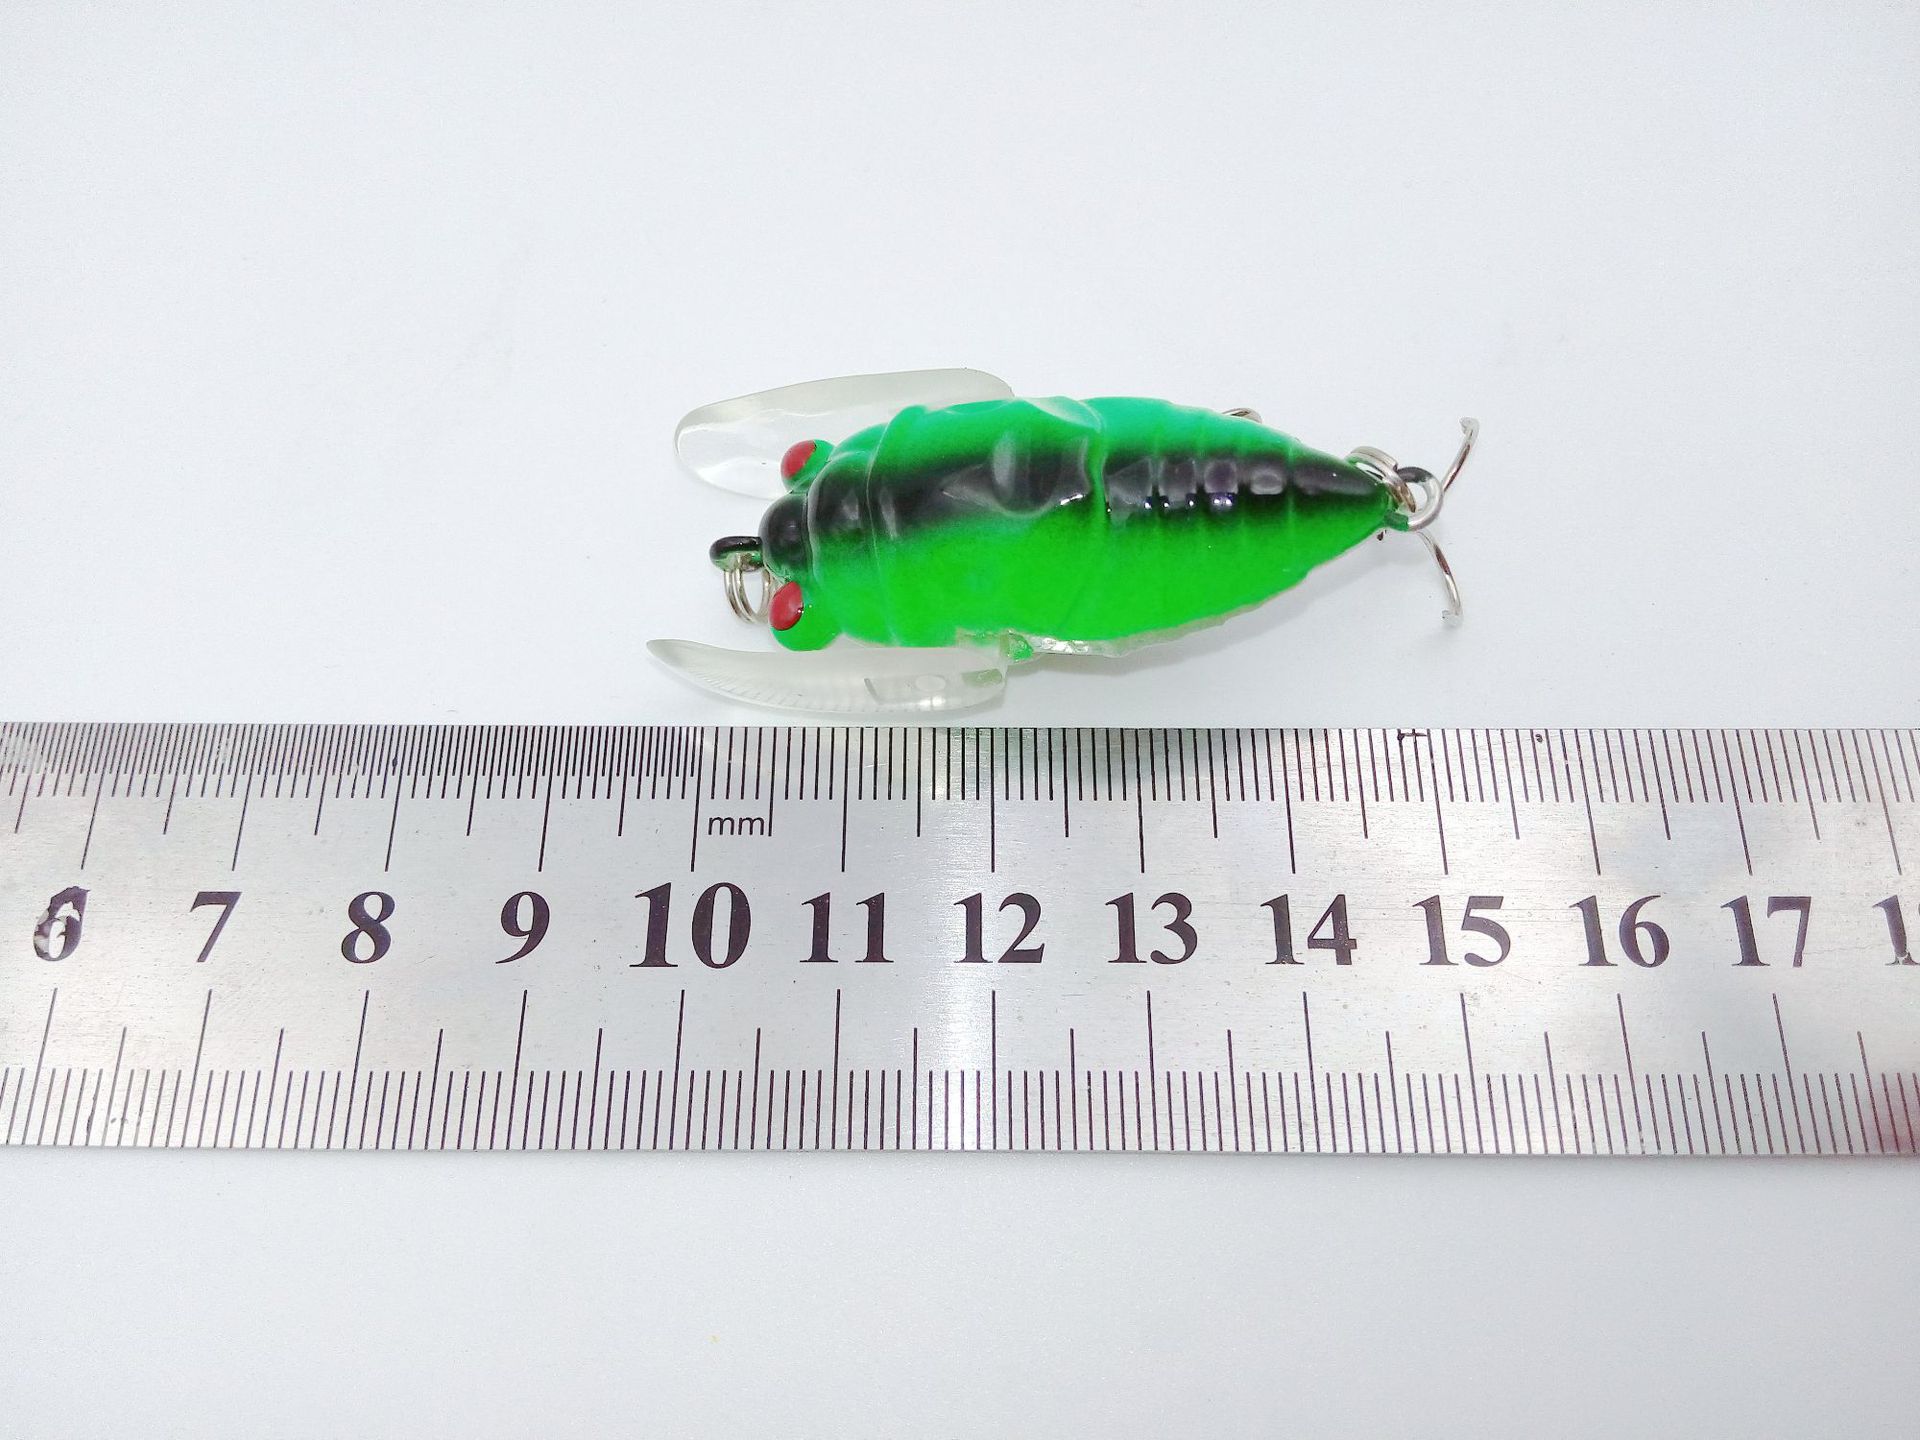 Lifelike Cicada Fishing Tackle Lures, Artificial Freshwater Swimming Bait Crankbaits